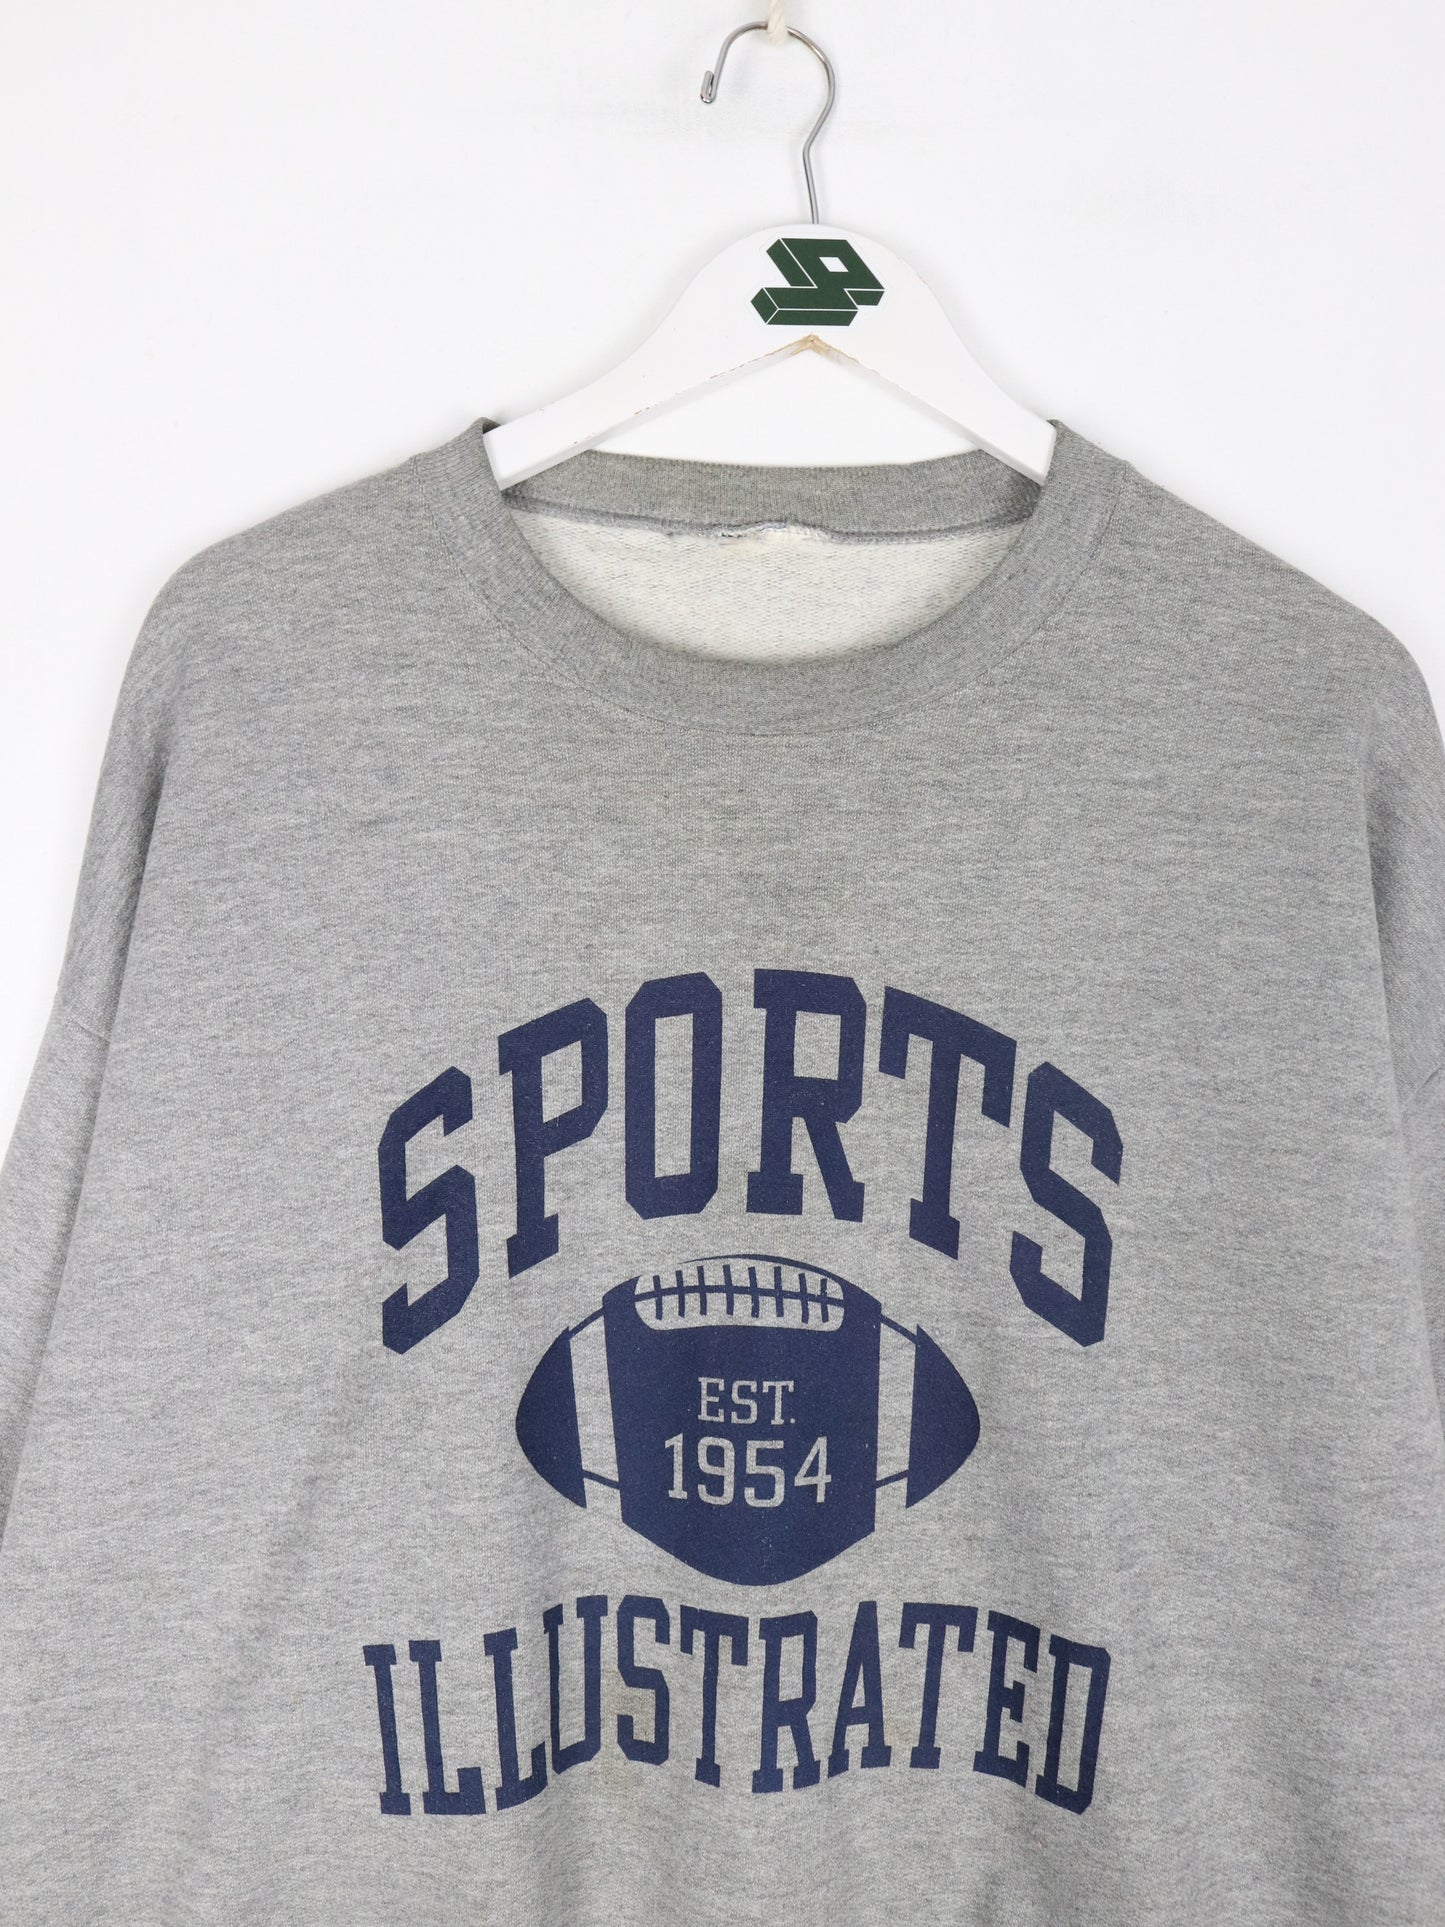 Vintage Sports Illustrated Sweatshirt Mens Large Grey